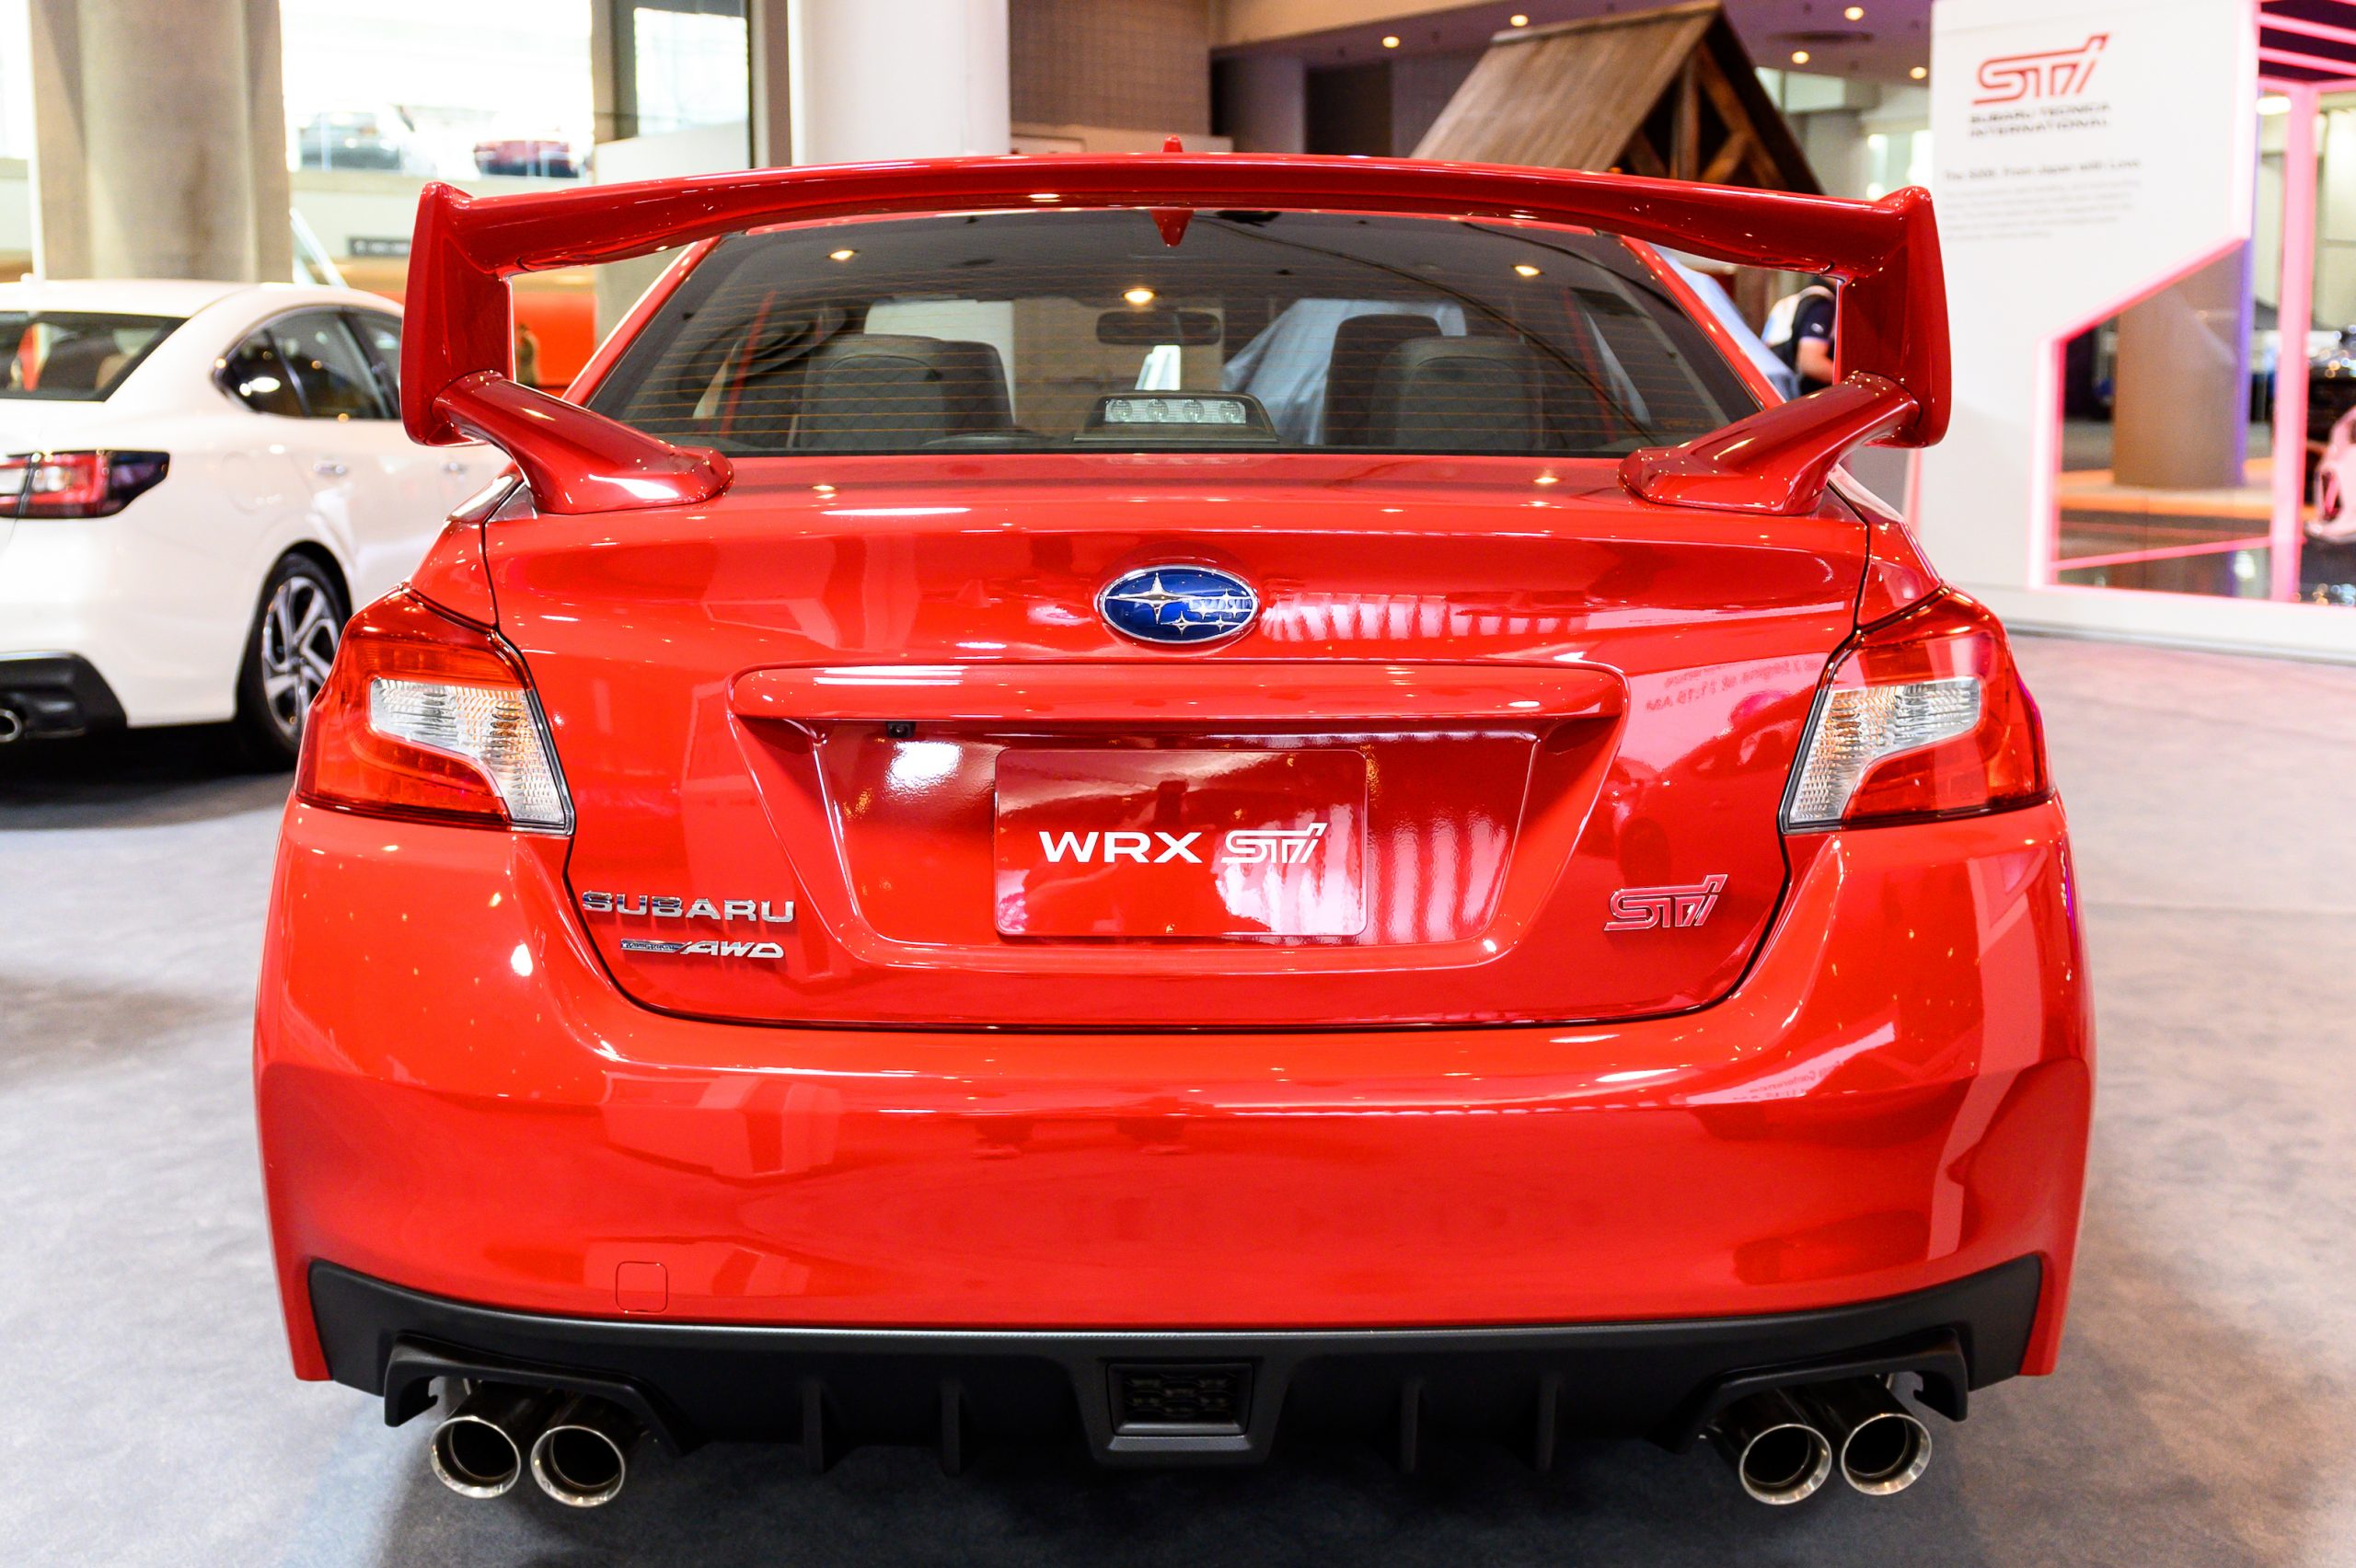 Red Subaru WRX STI seen at the New York International Auto Show